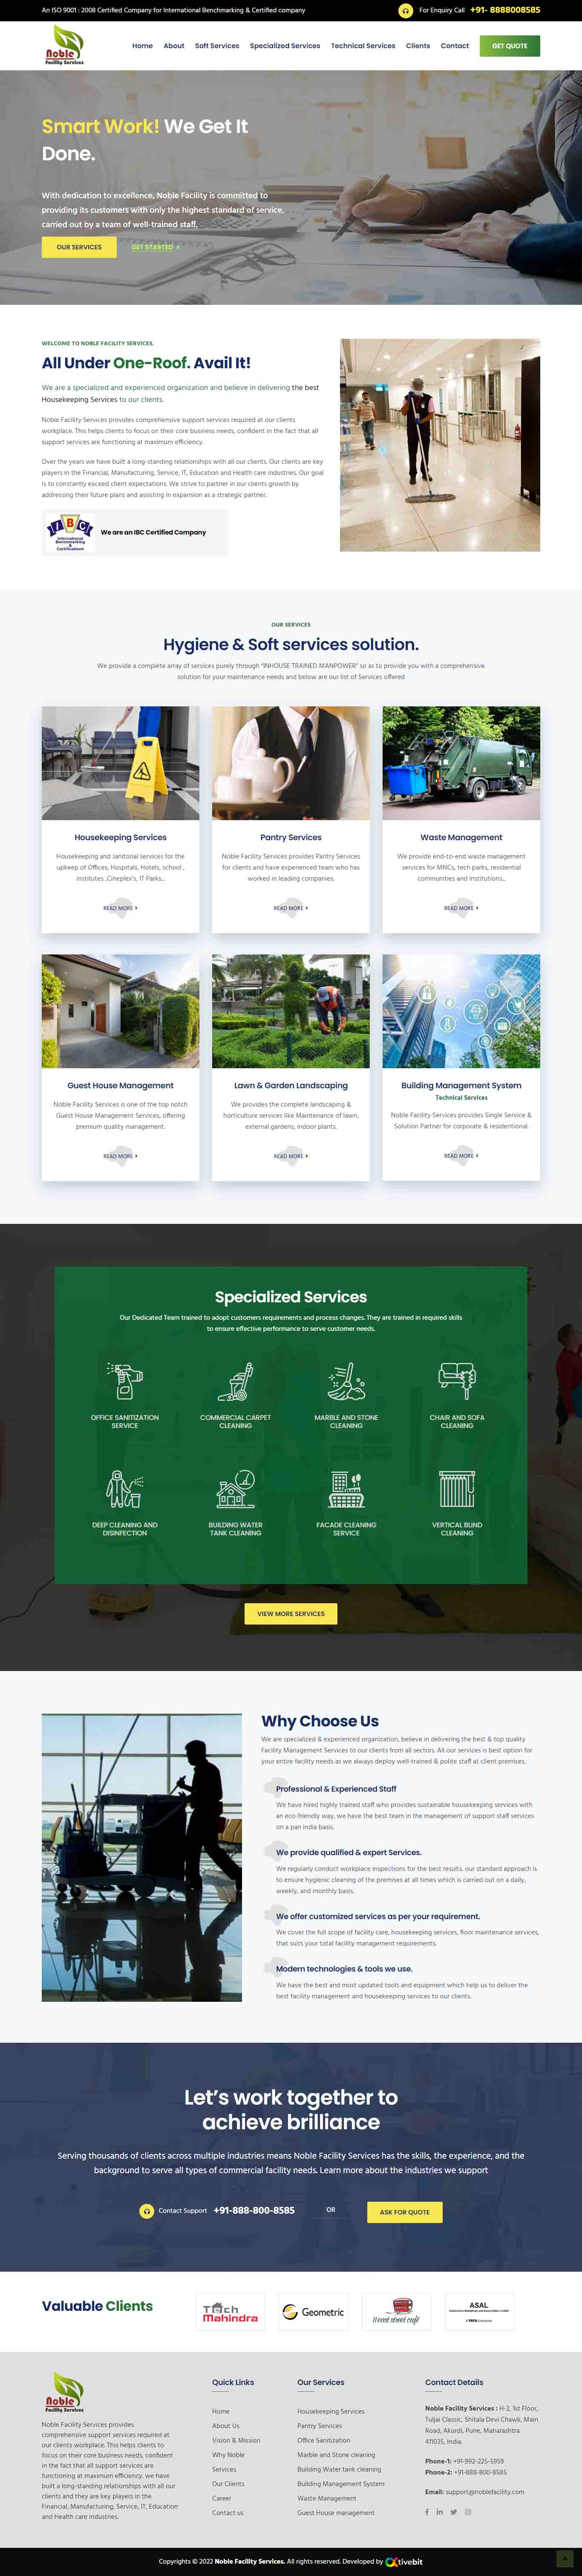 Noble Facility Services website design